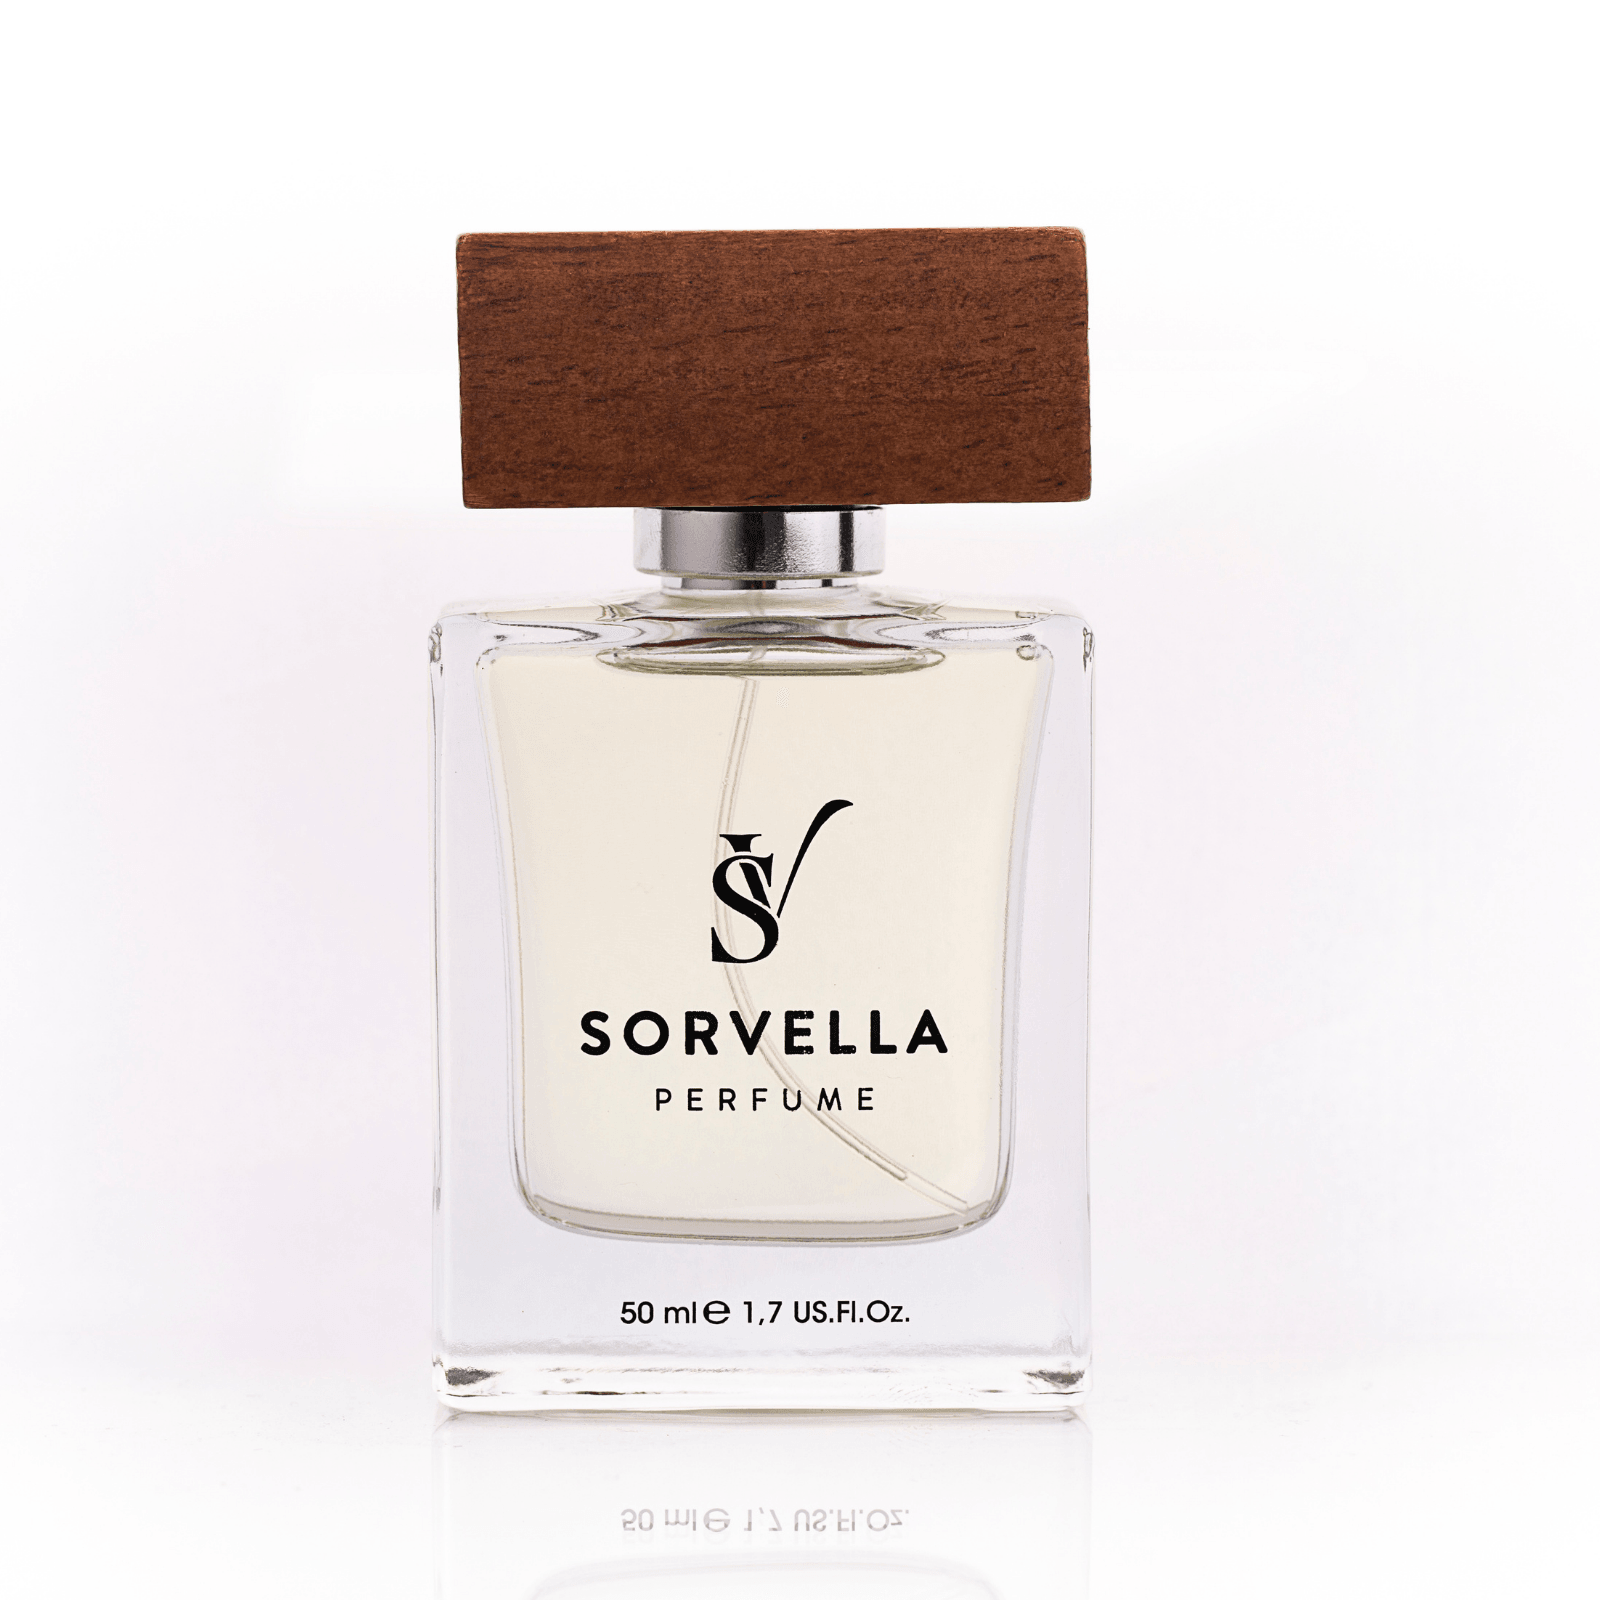 Fresh Men's Perfume Sorvella S34 - Allure Pour Homme 50ml